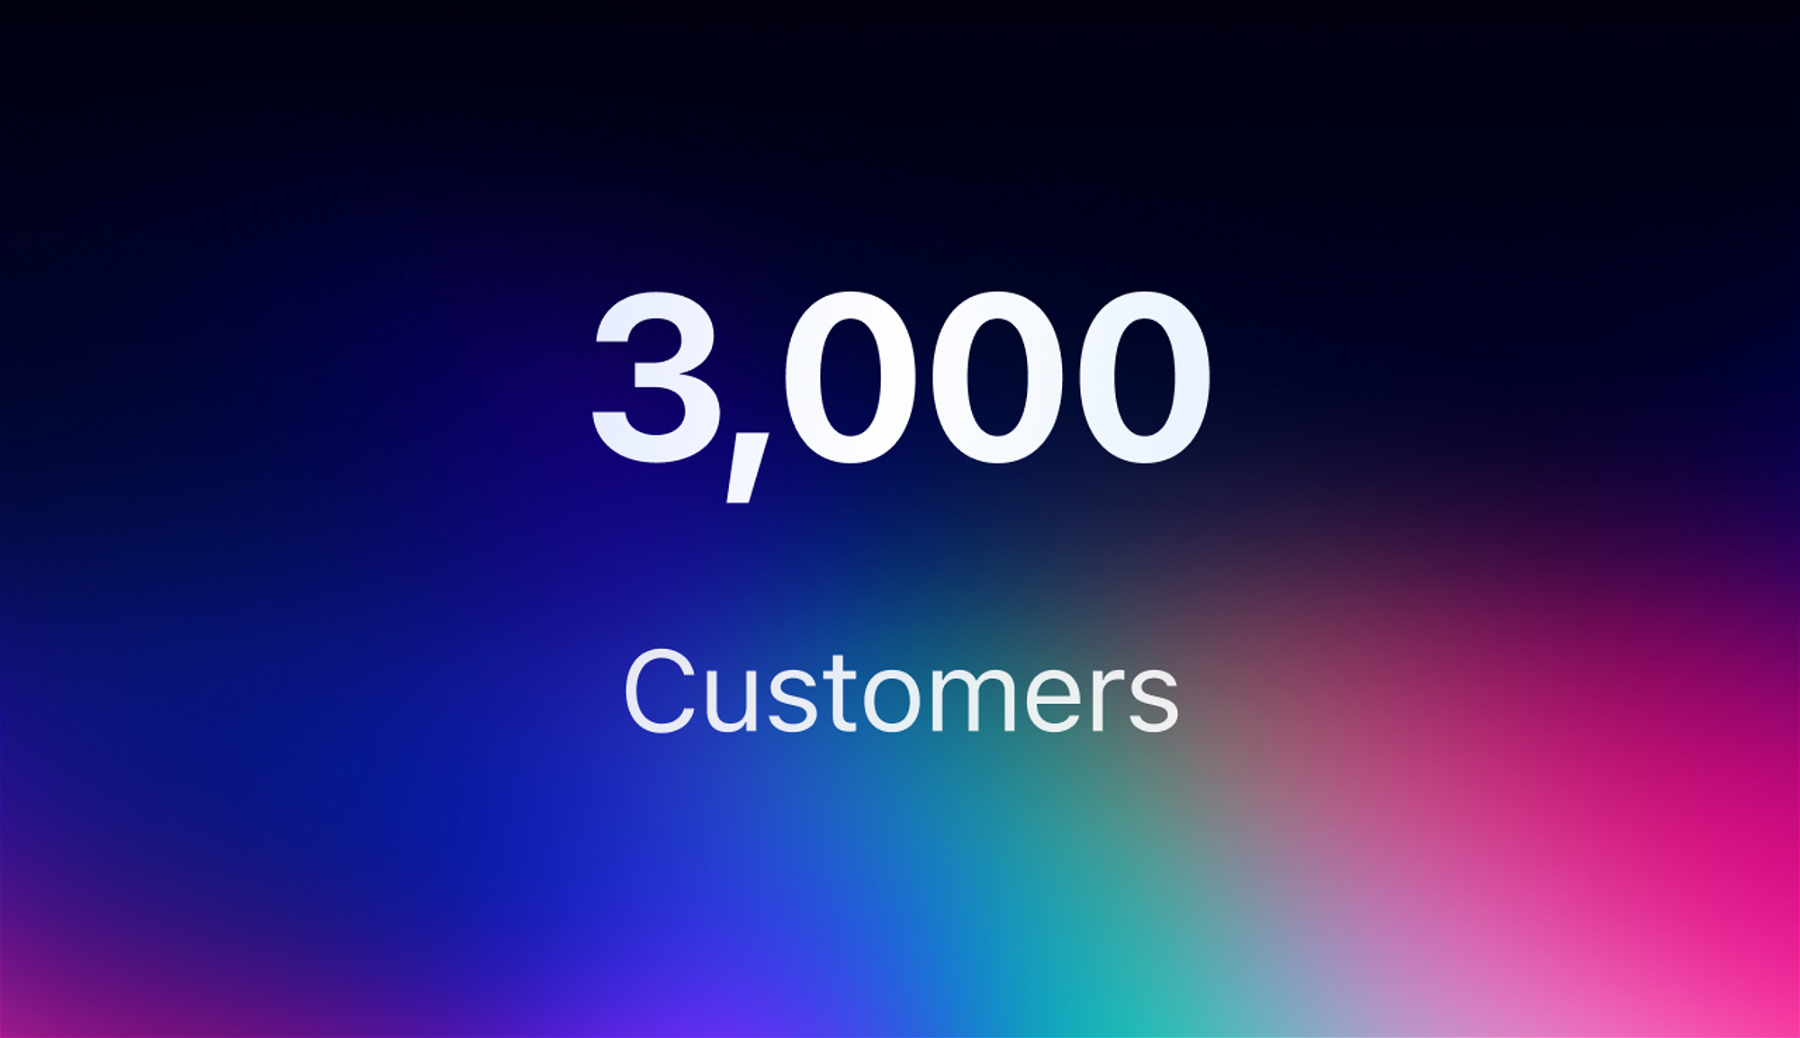 We hit 3,000 customers 🎉